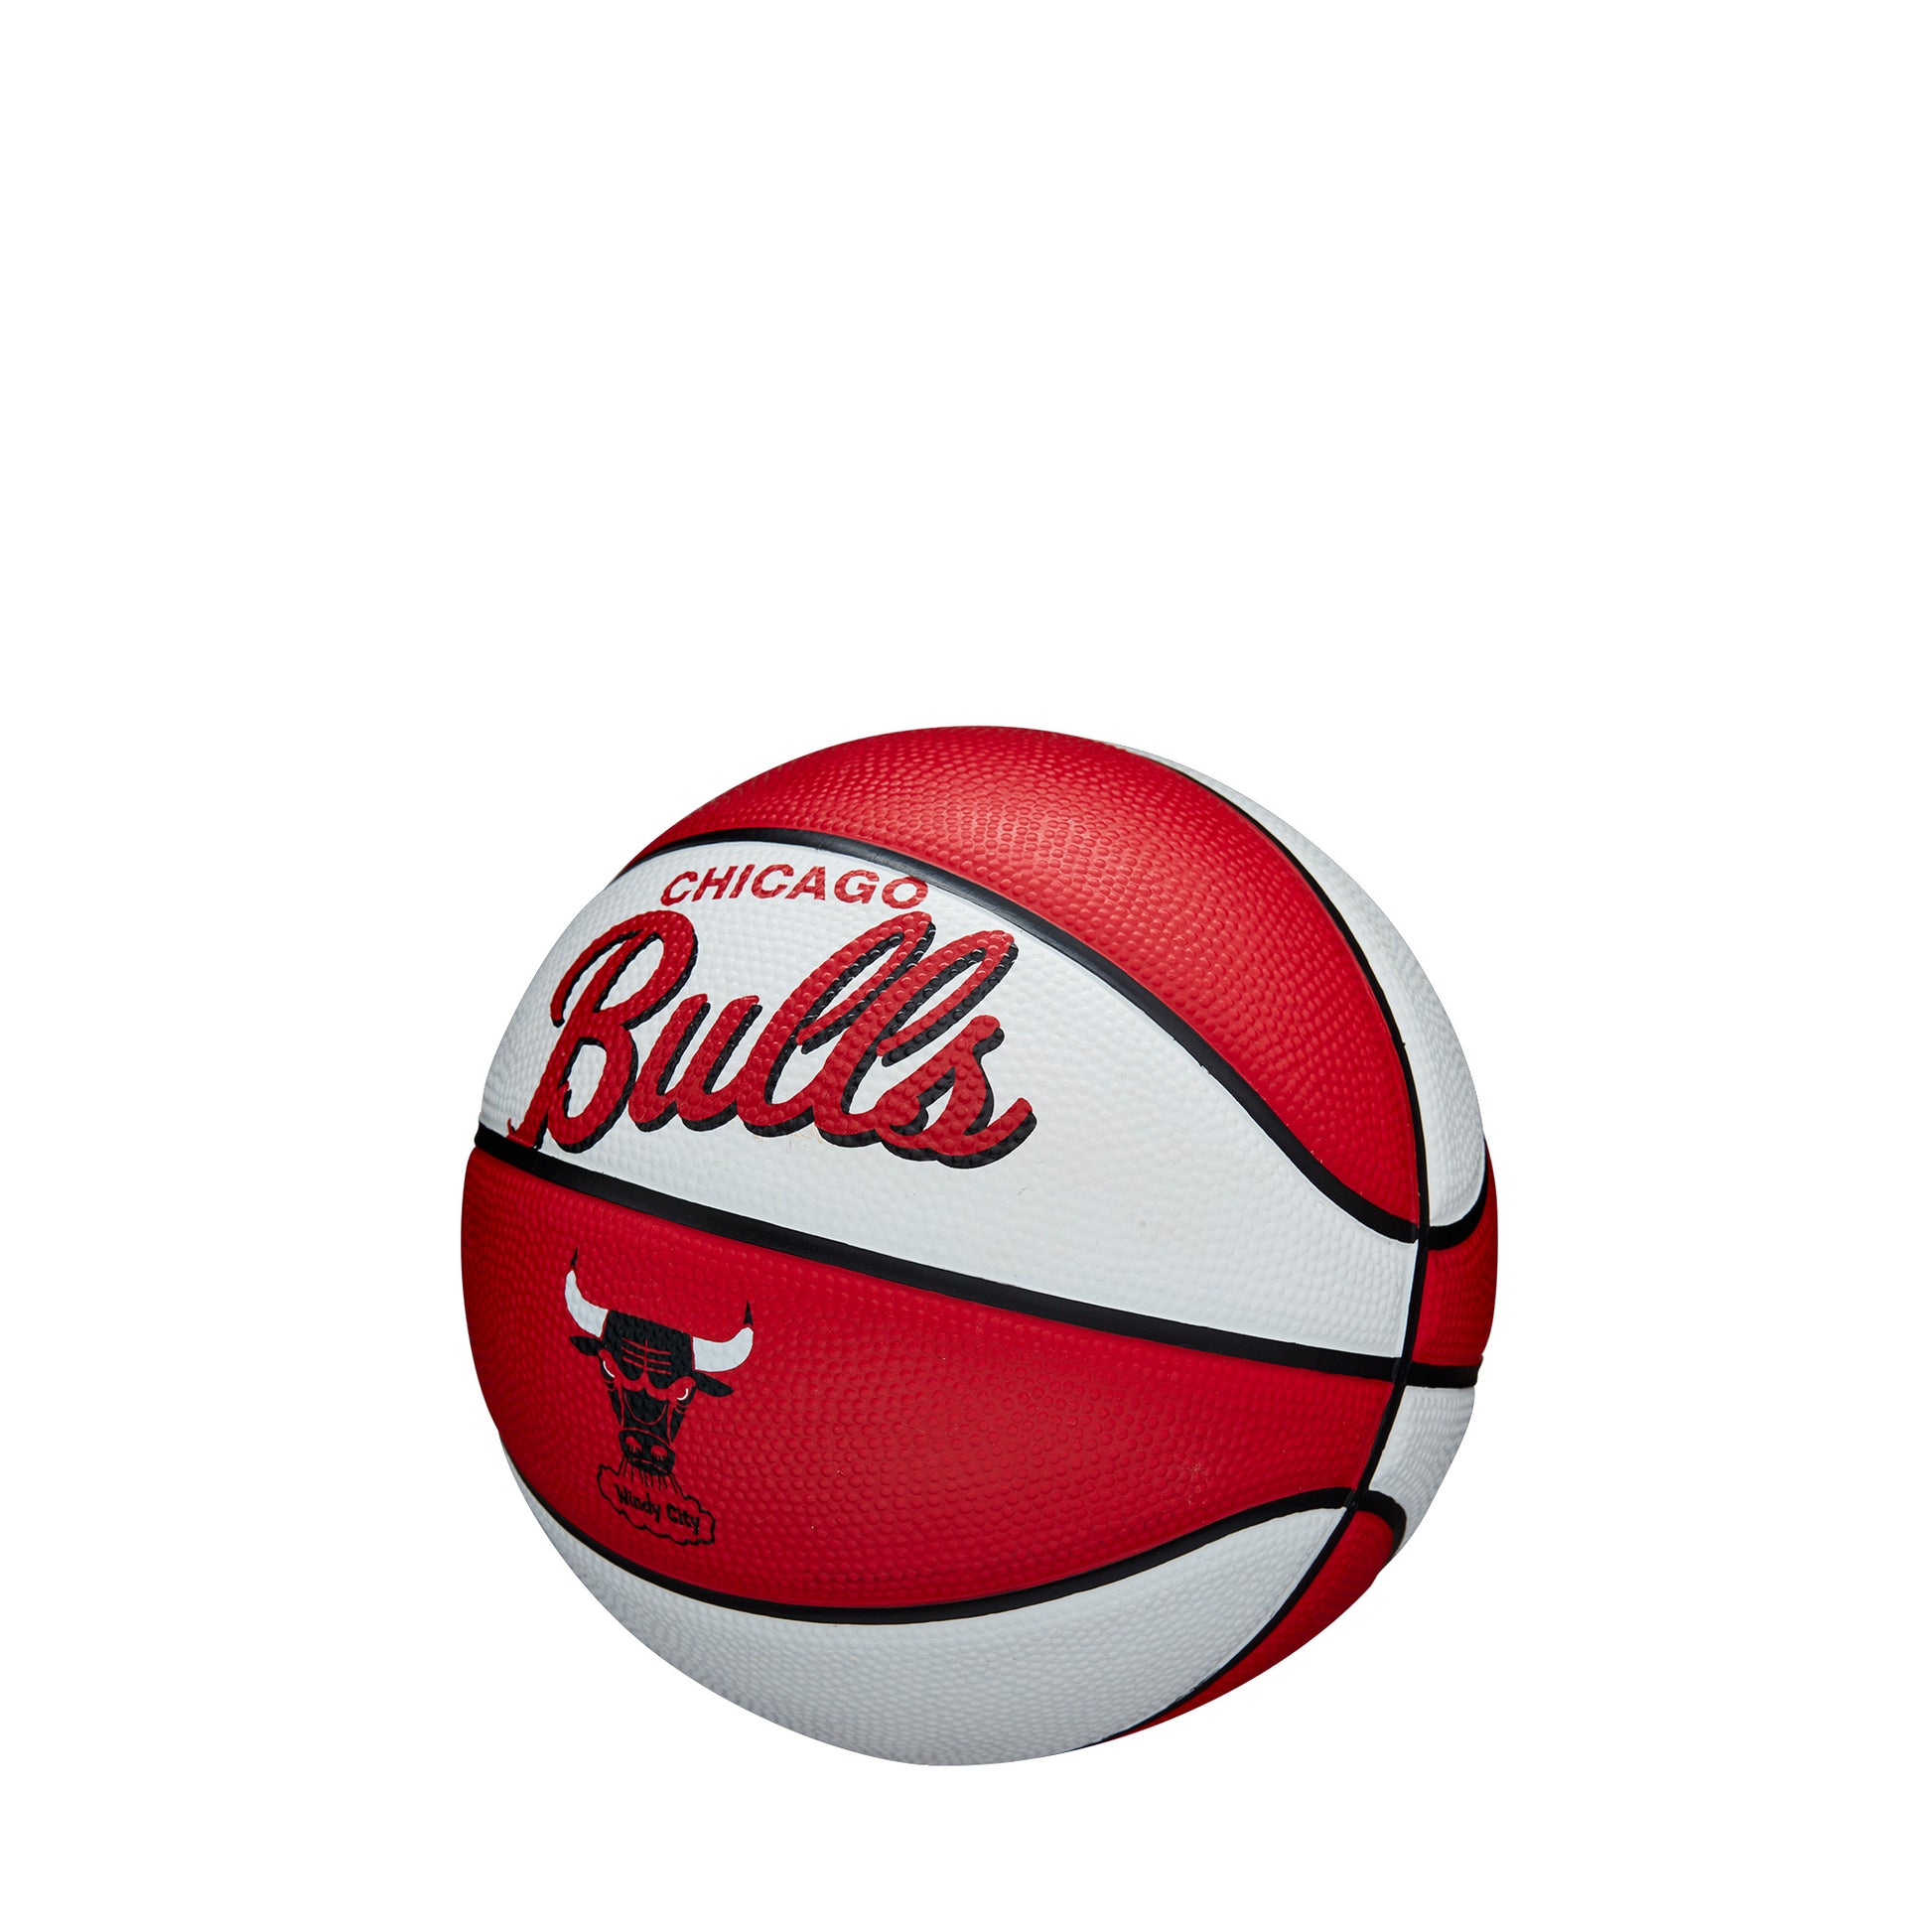 Wilson NBA TEAM RETRO MINI BASKETBALL CHICAGO BULLS Red/White WTB32XBCH